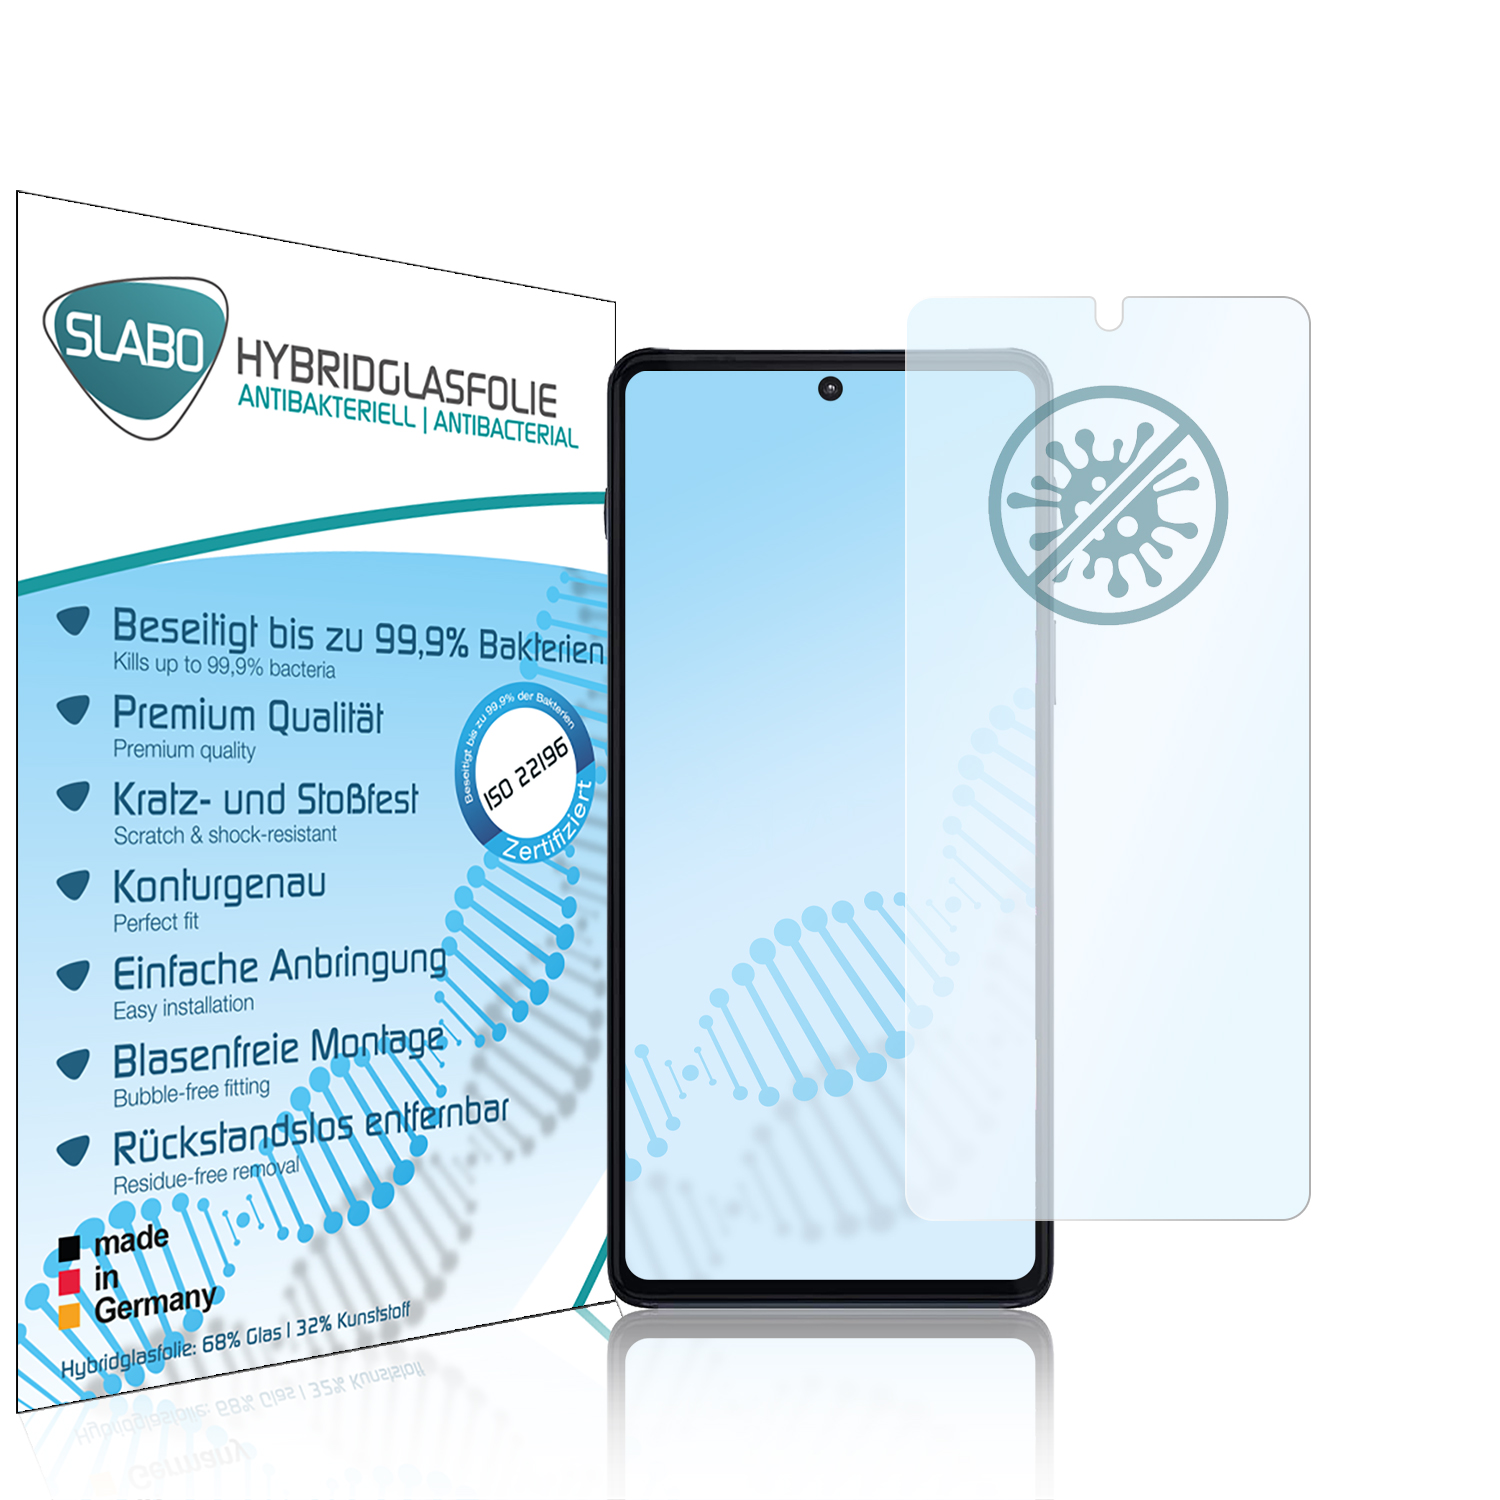 SLABO antibakteriell flexibles 20 Motorola PRO) Displayschutz(für edge Hybridglas | 20 edge